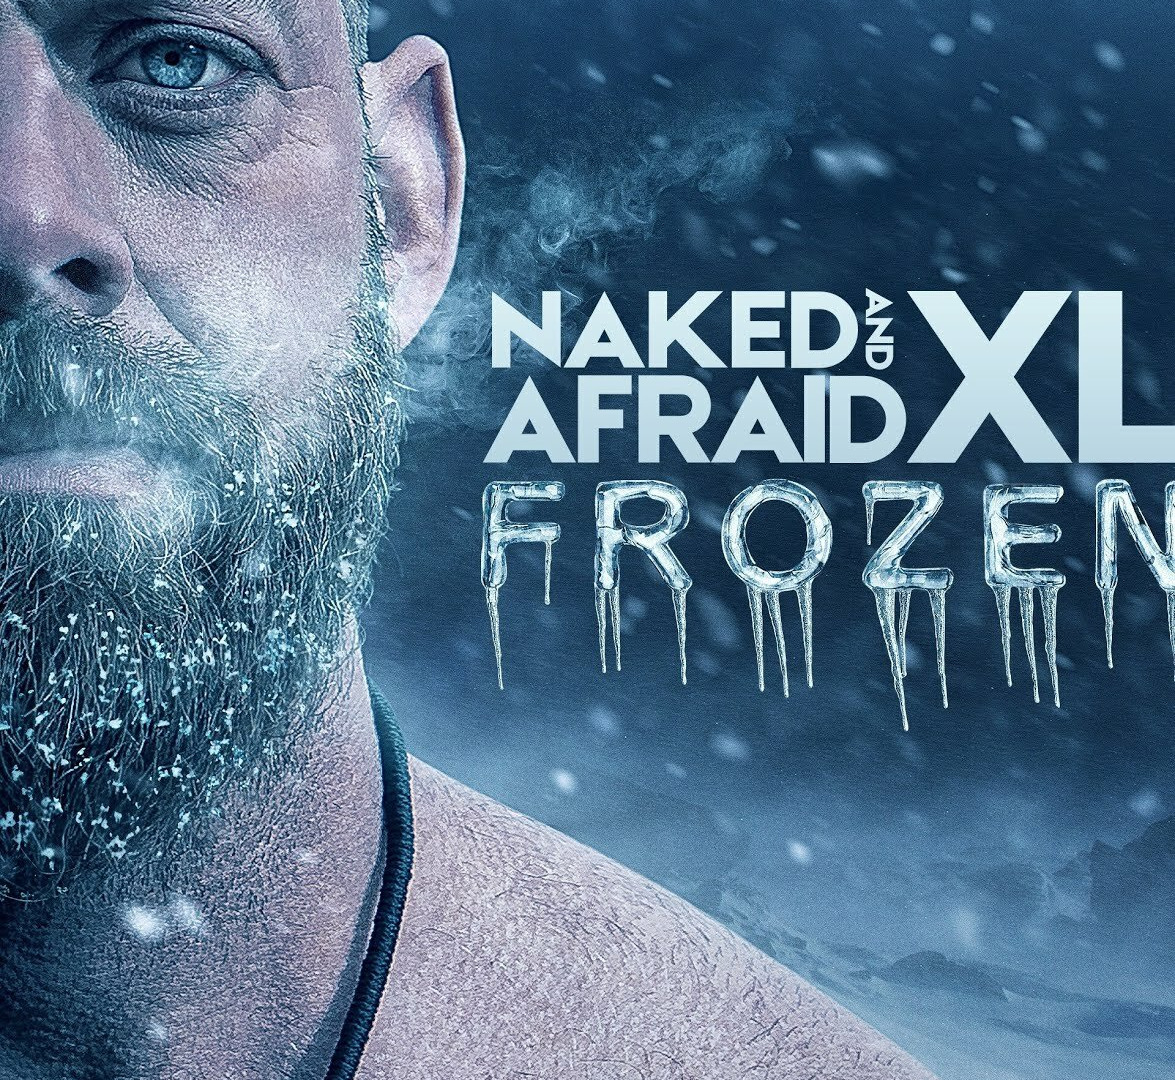 Сериал Naked and Afraid XL Frozen